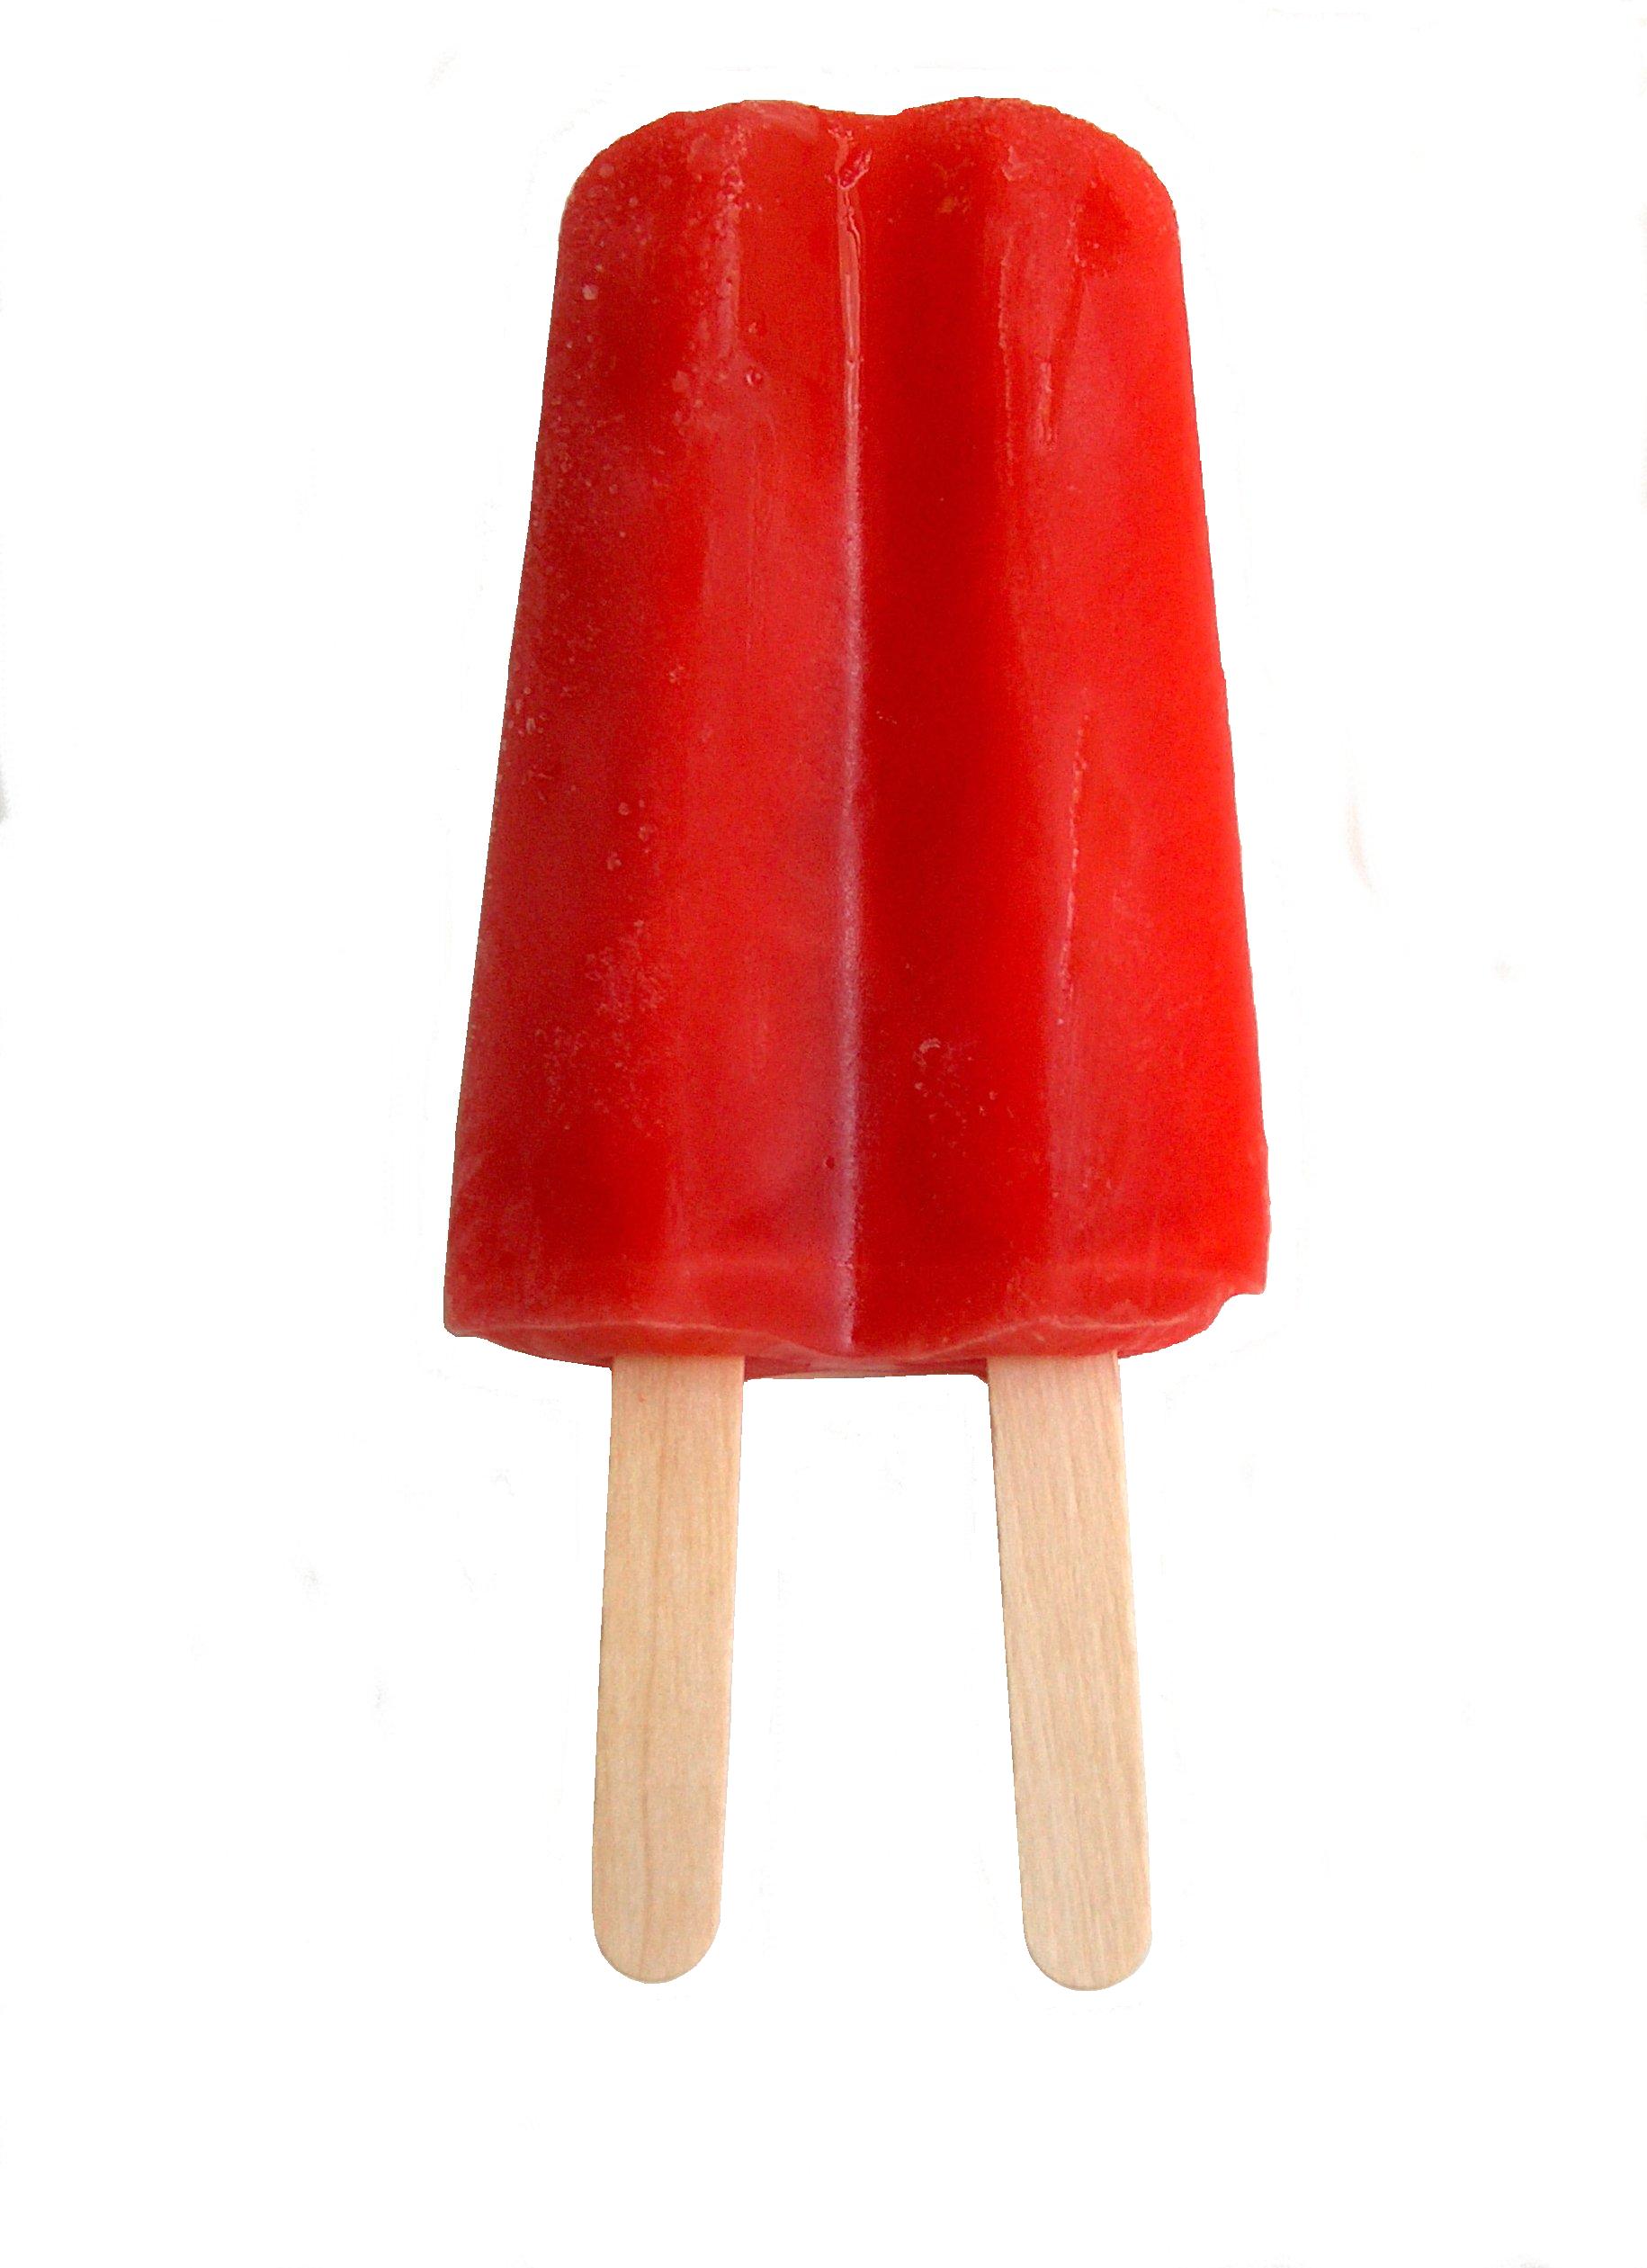 Popsicle Stick Clip Art - Free Clipart Images